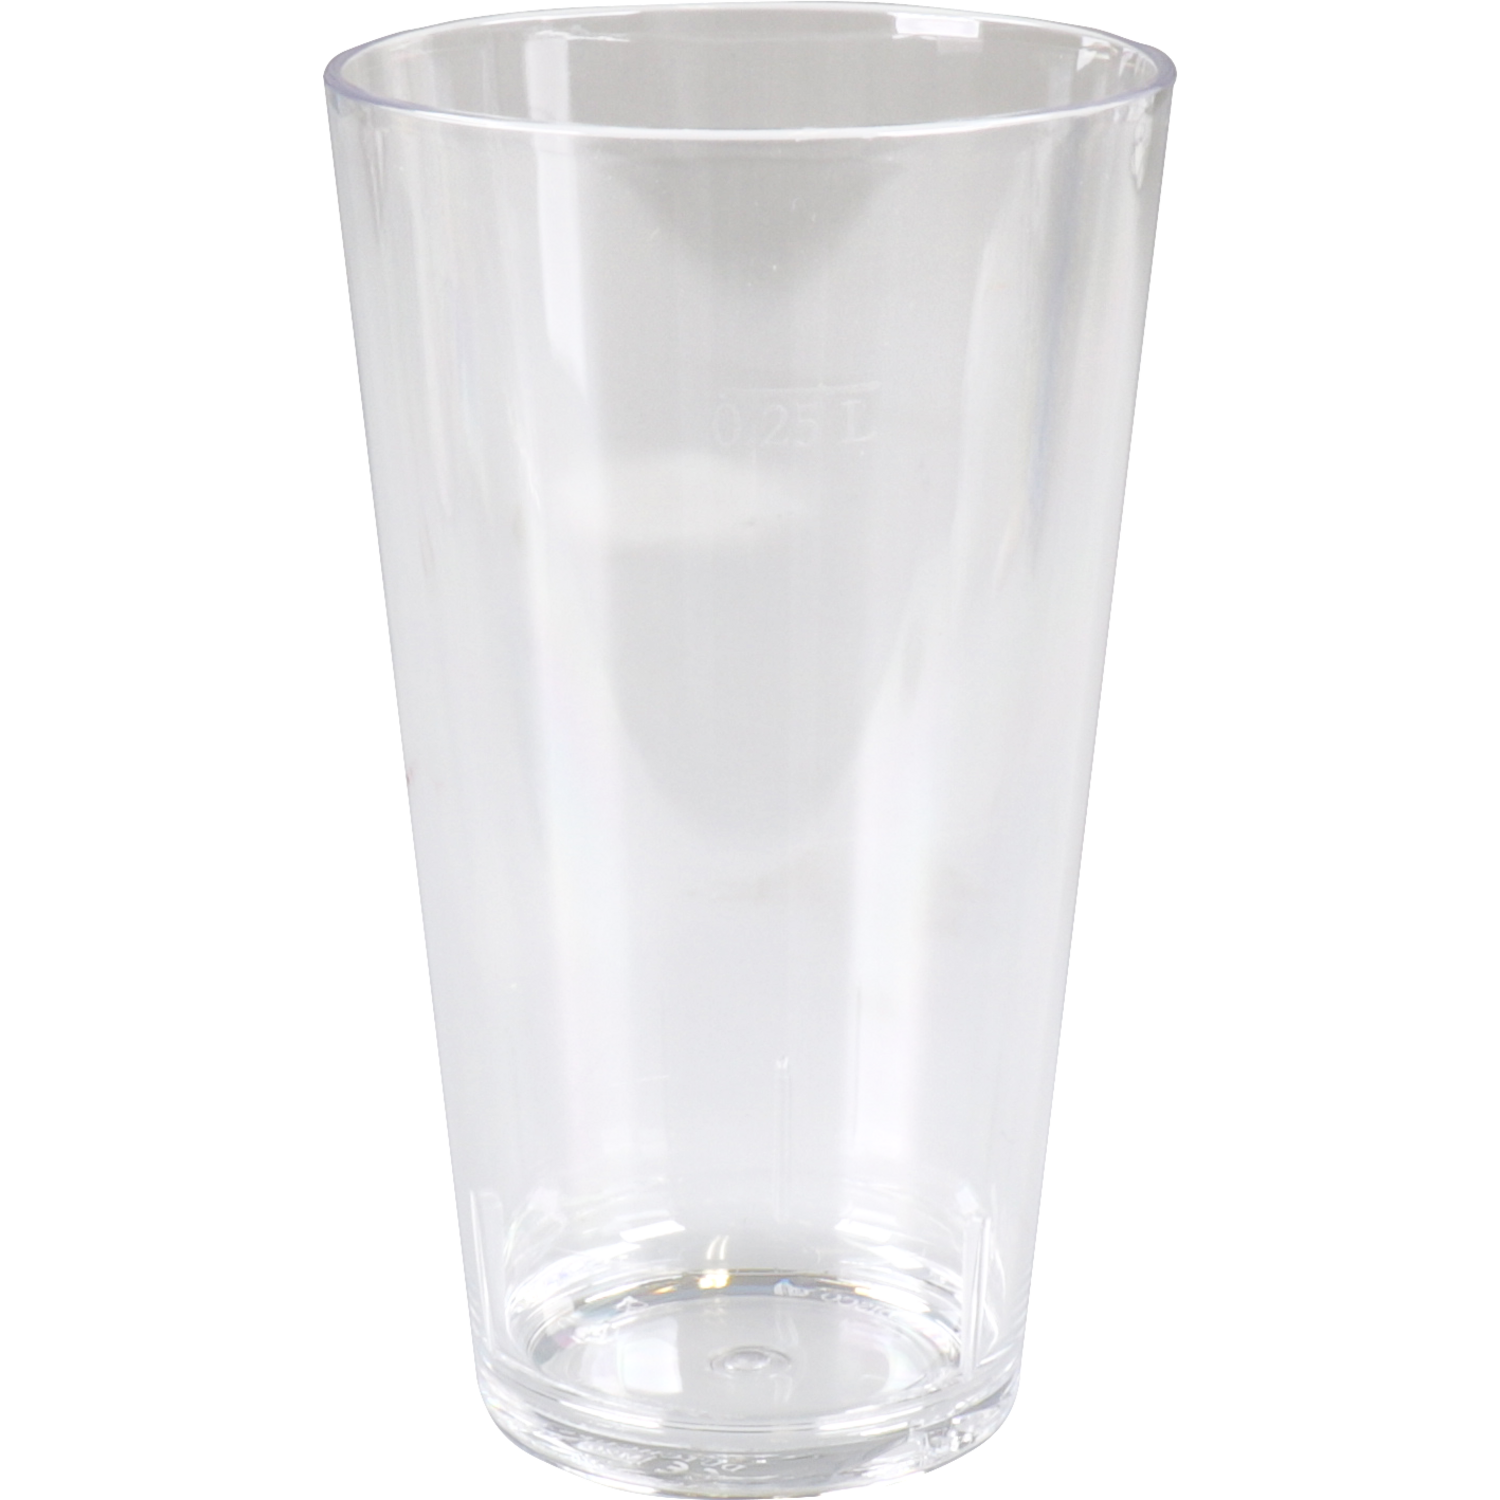 Depa® Glass, amsterdammertje, reusable, unbreakable, pETG, 310ml, transparent 1